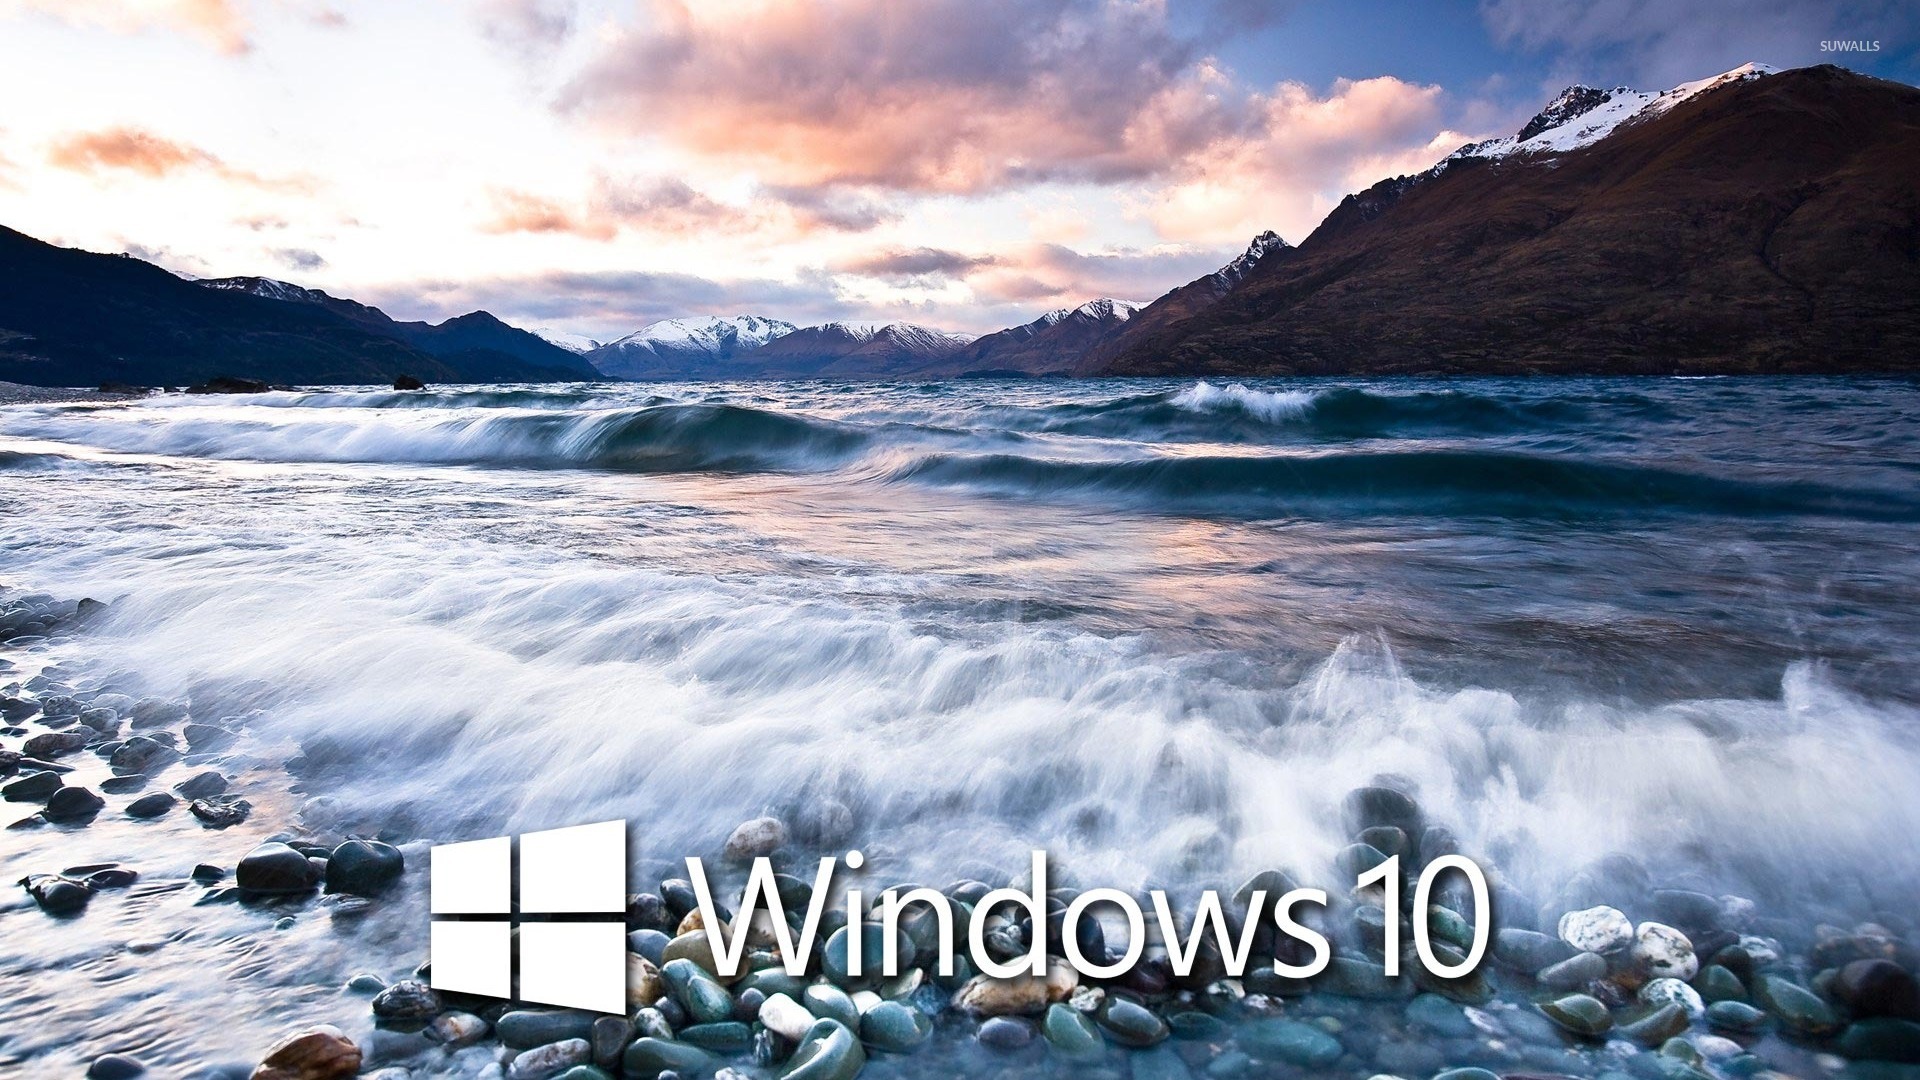 Windows 10 on the lake shore white text logo wallpaper - Computer ...